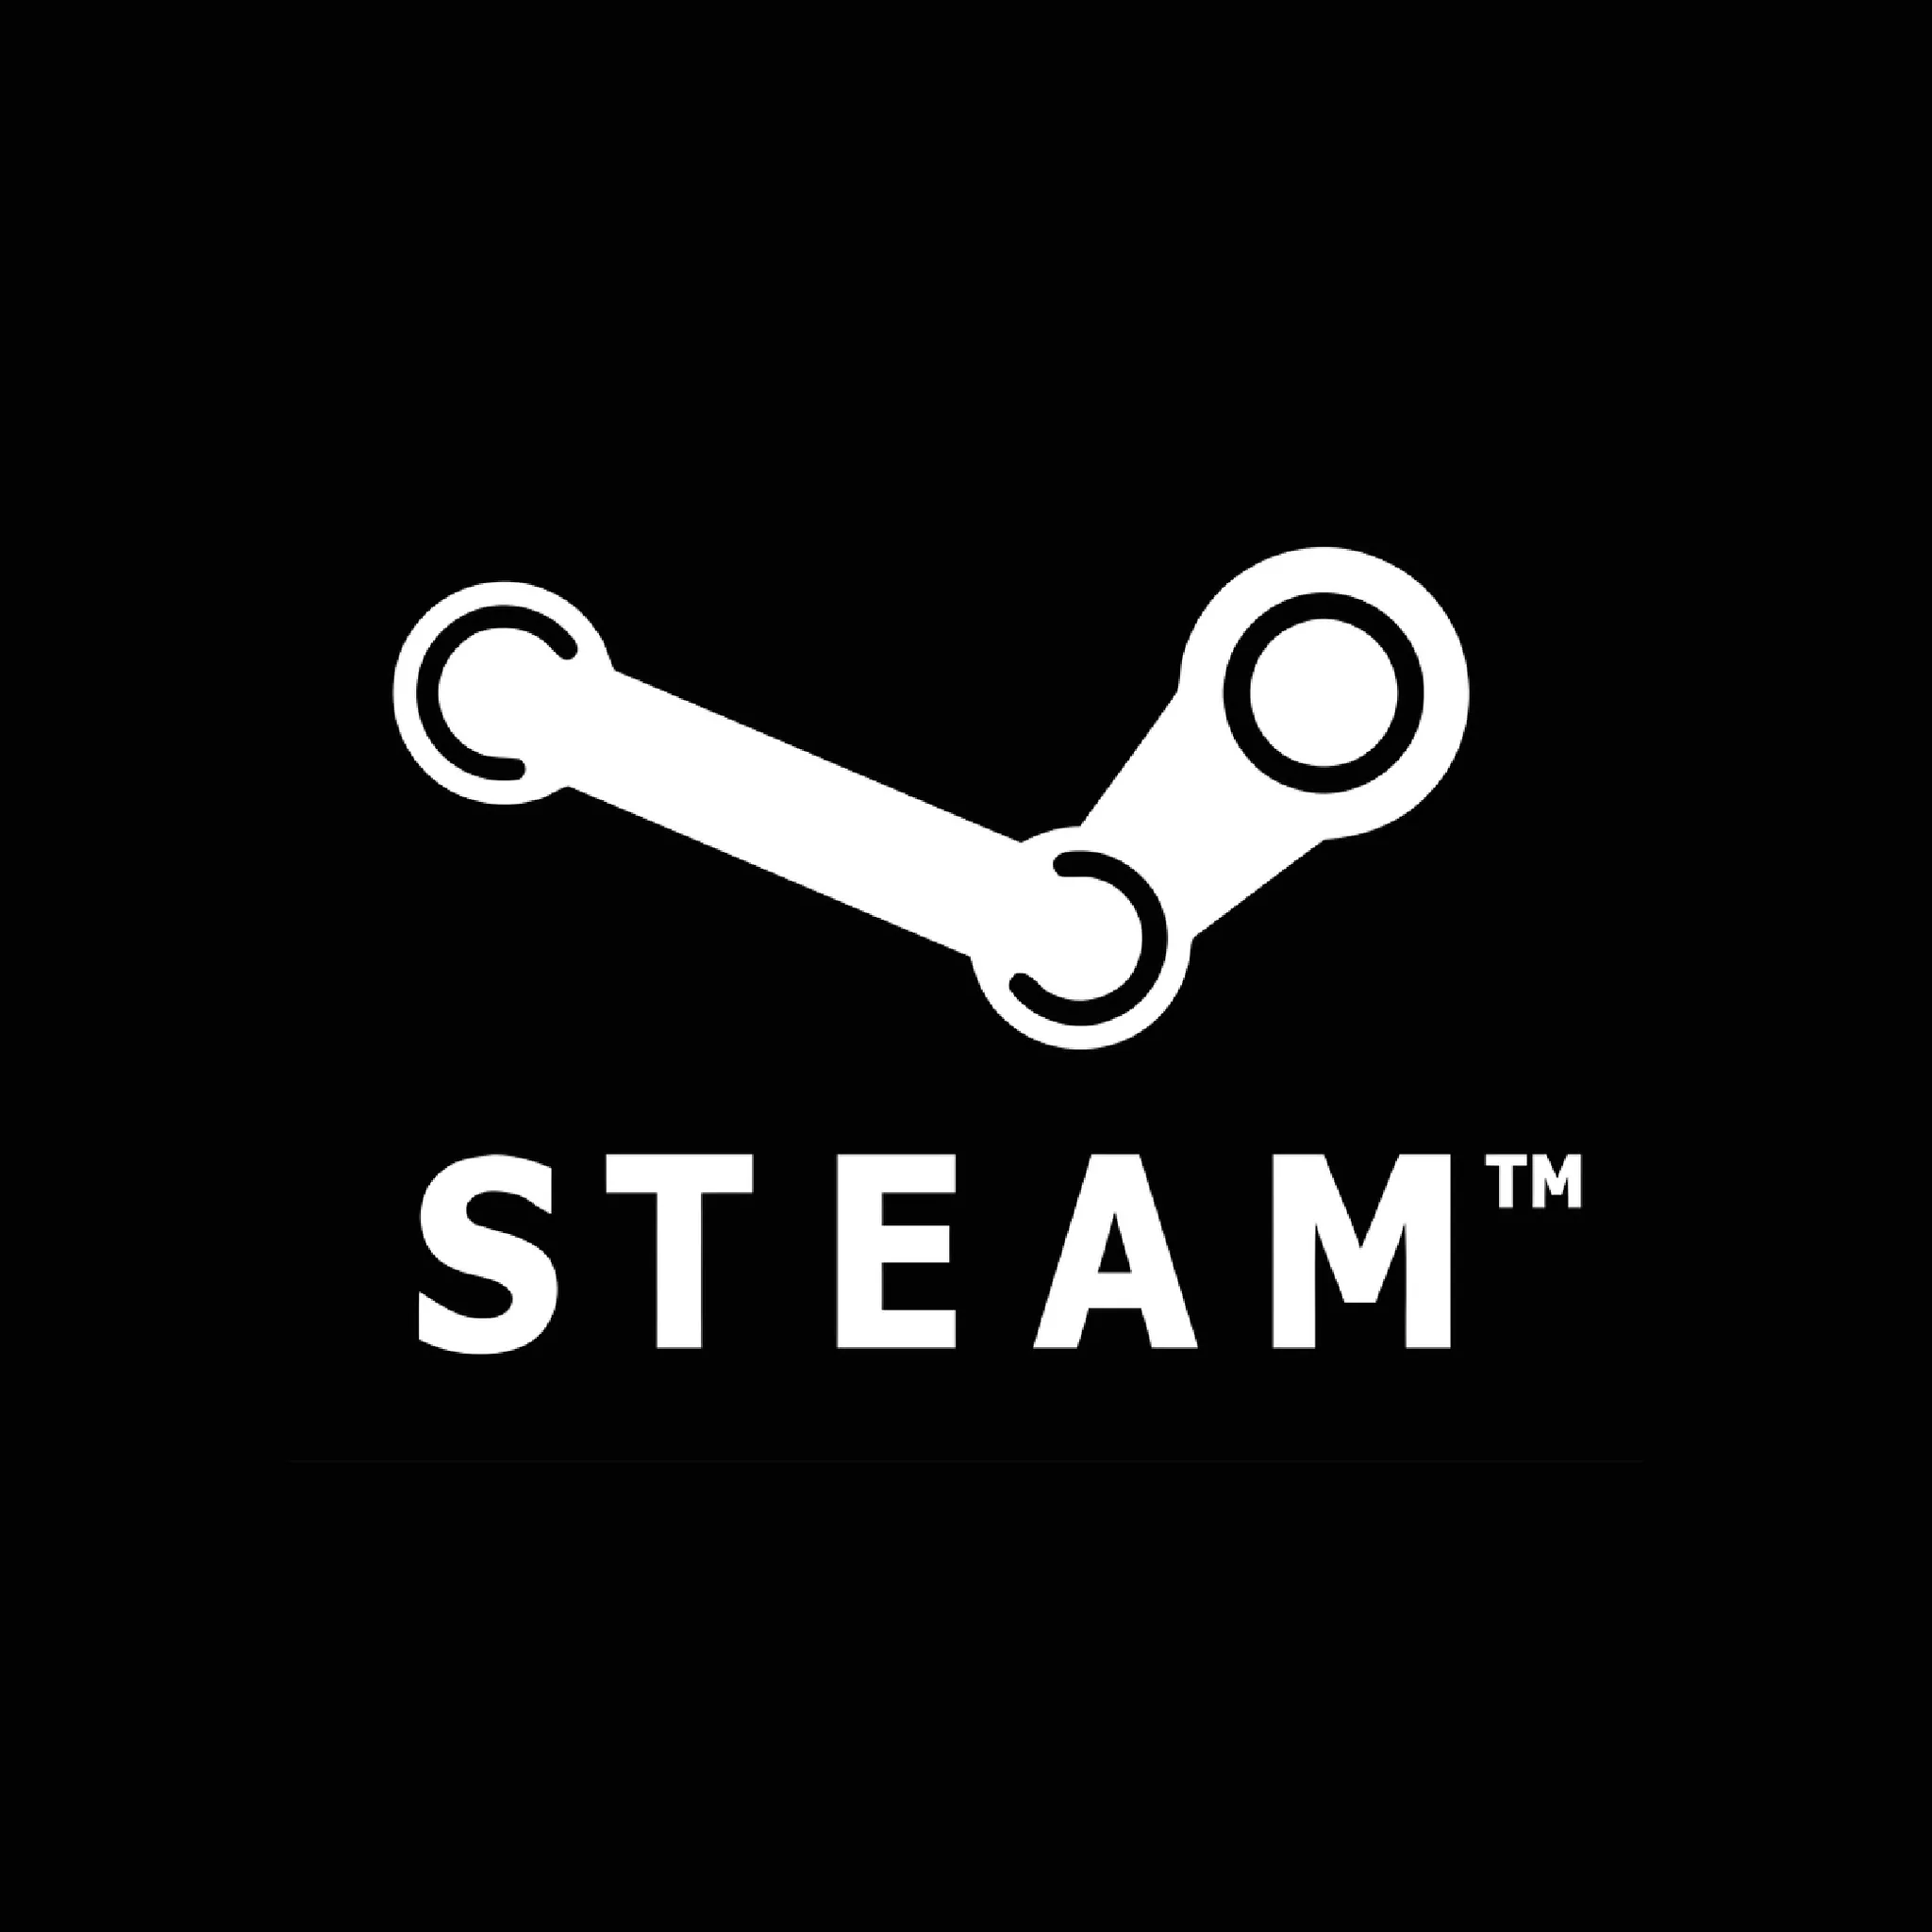 My game steam. Steam. Steam logo. Кнопка стим. Ключи стим.